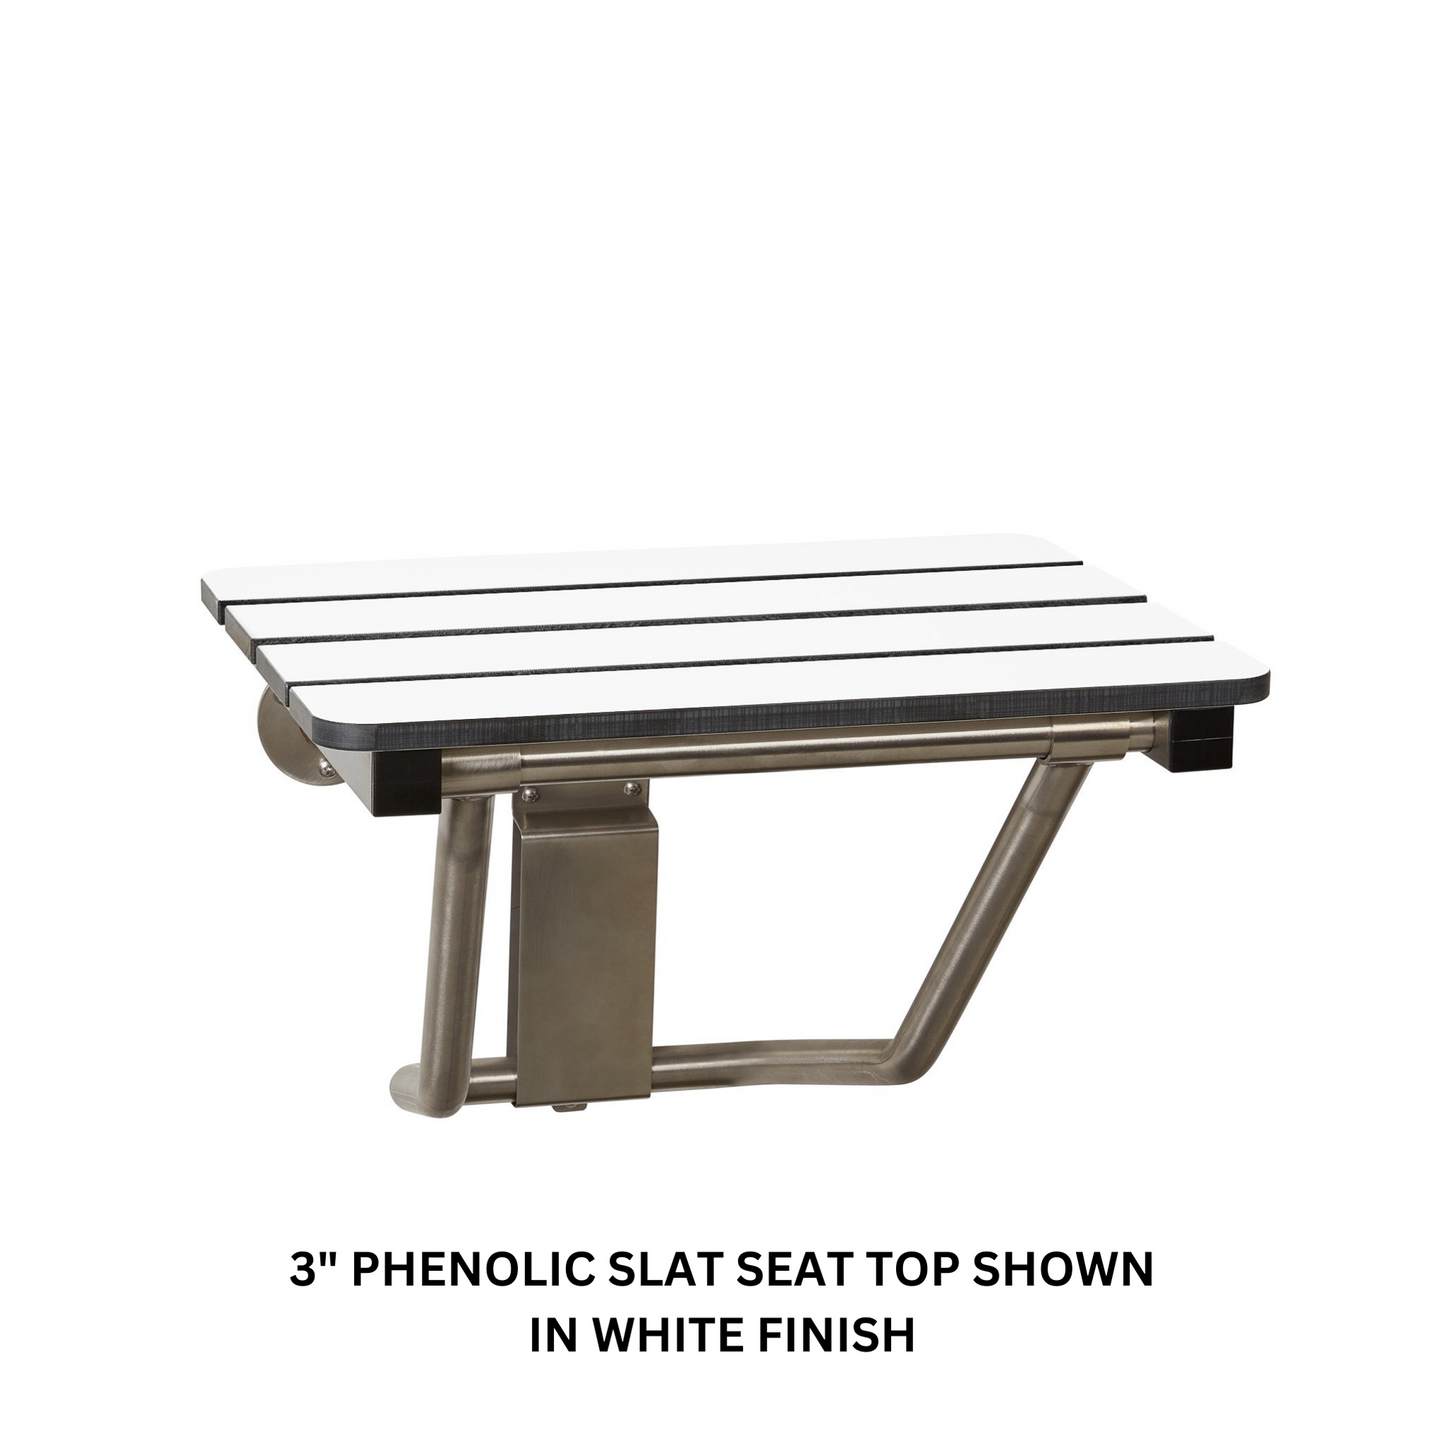 Seachrome Signature Series 22" W x 15" D Gray 3" Phenolic Slats Phenolic Seat Top Folding Wall Mount Bench Shower Seat